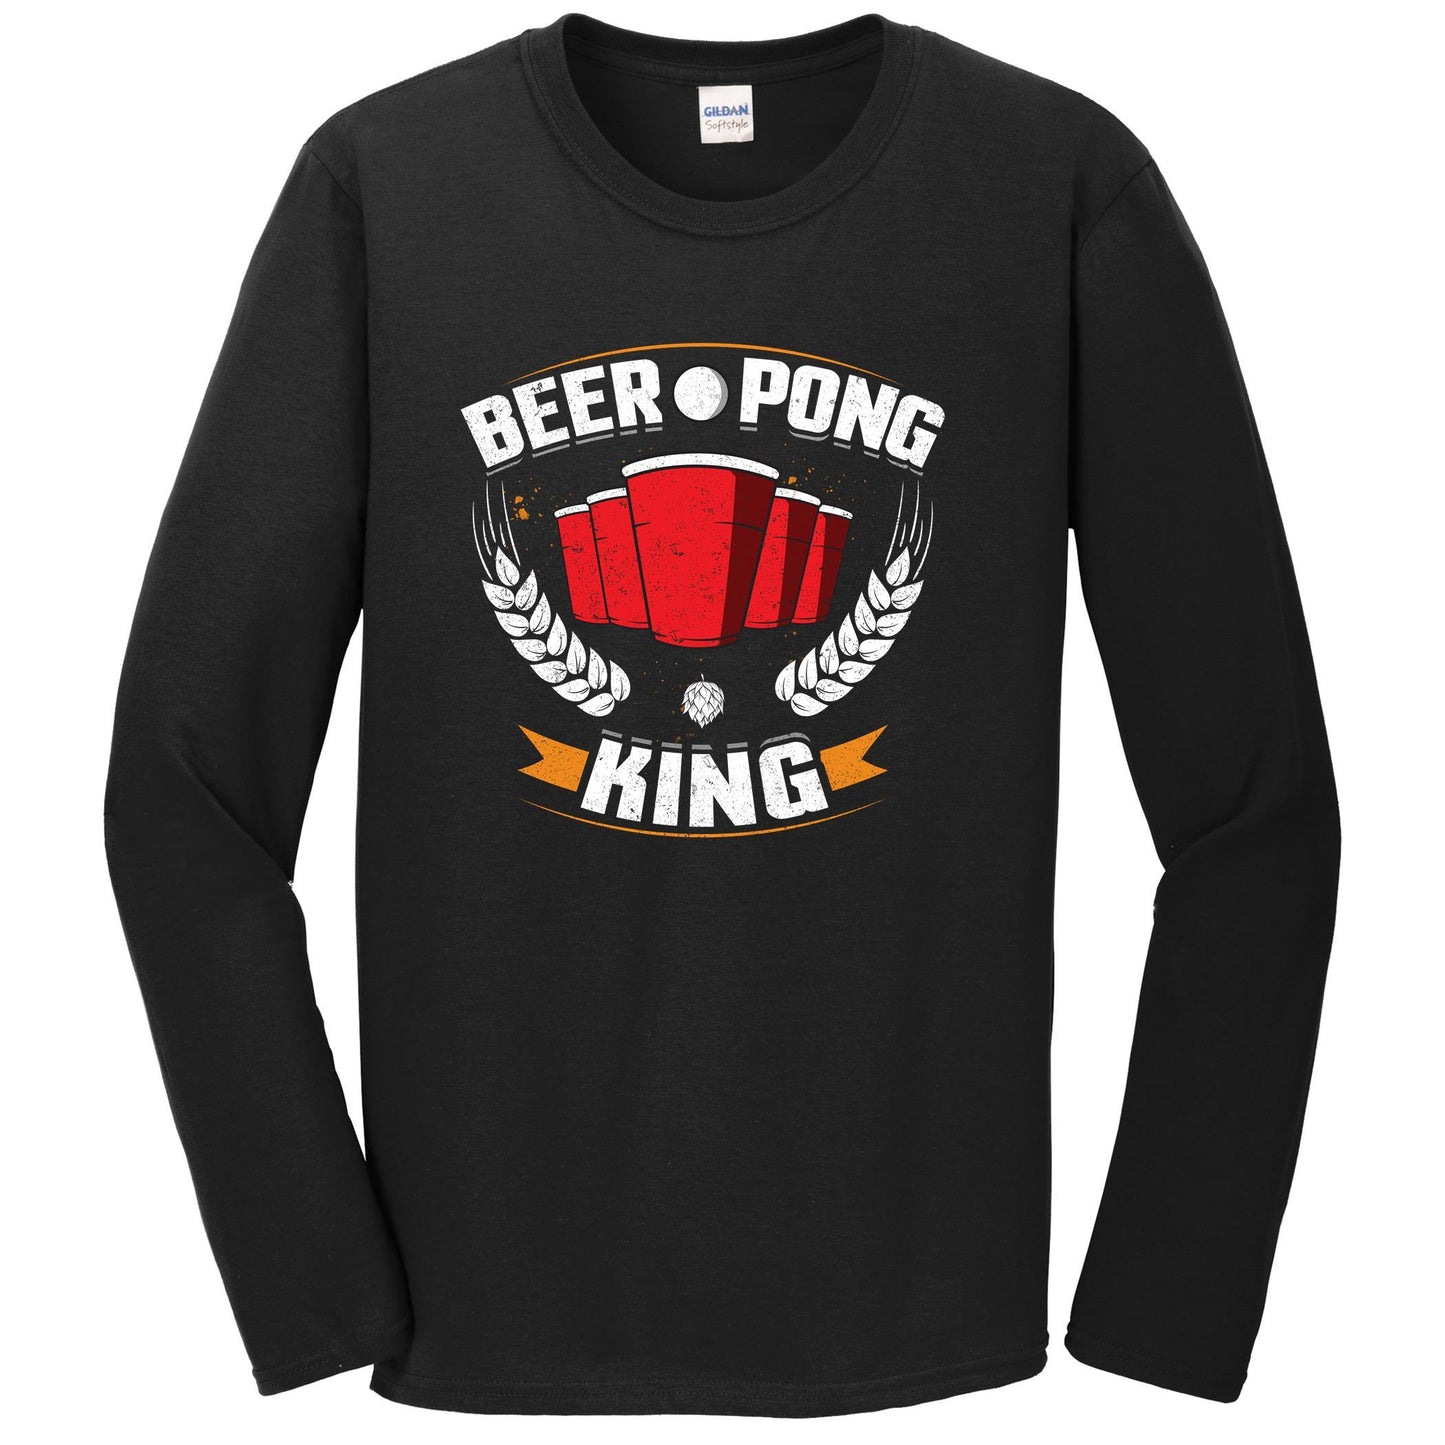 Beer Pong King Funny Drinking Long Sleeve Shirt